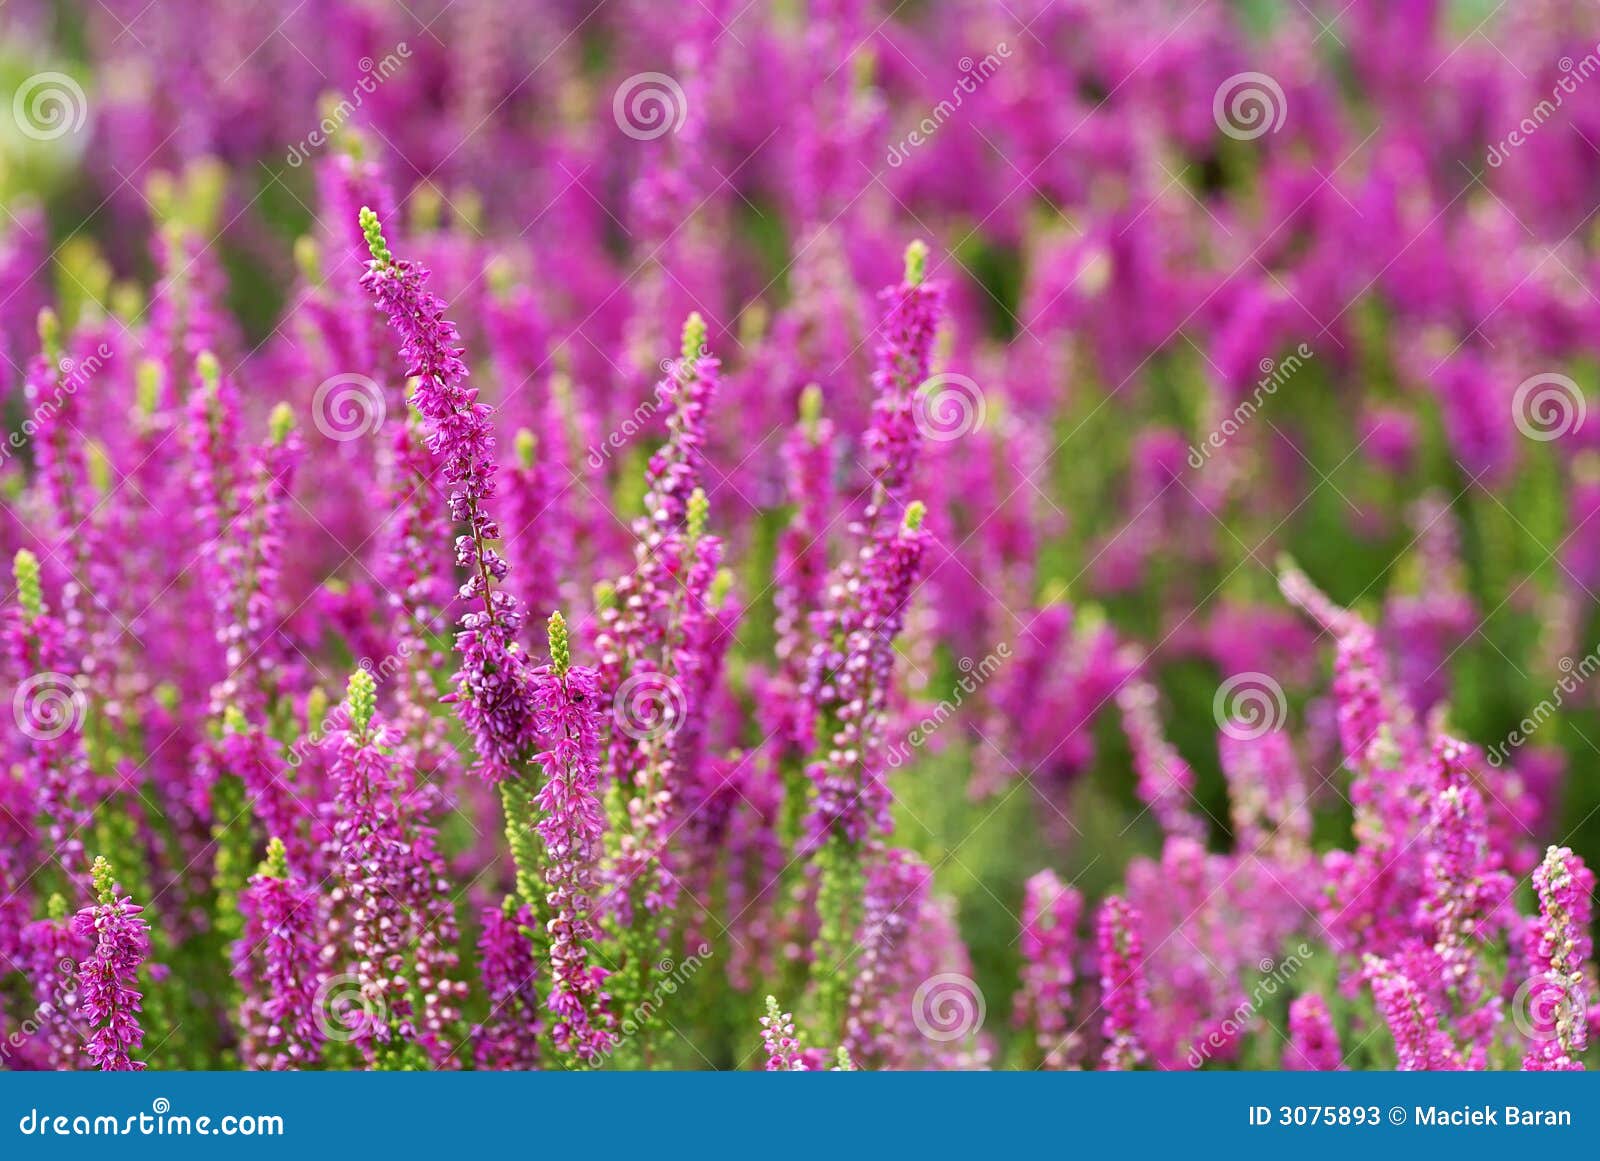 violet heather